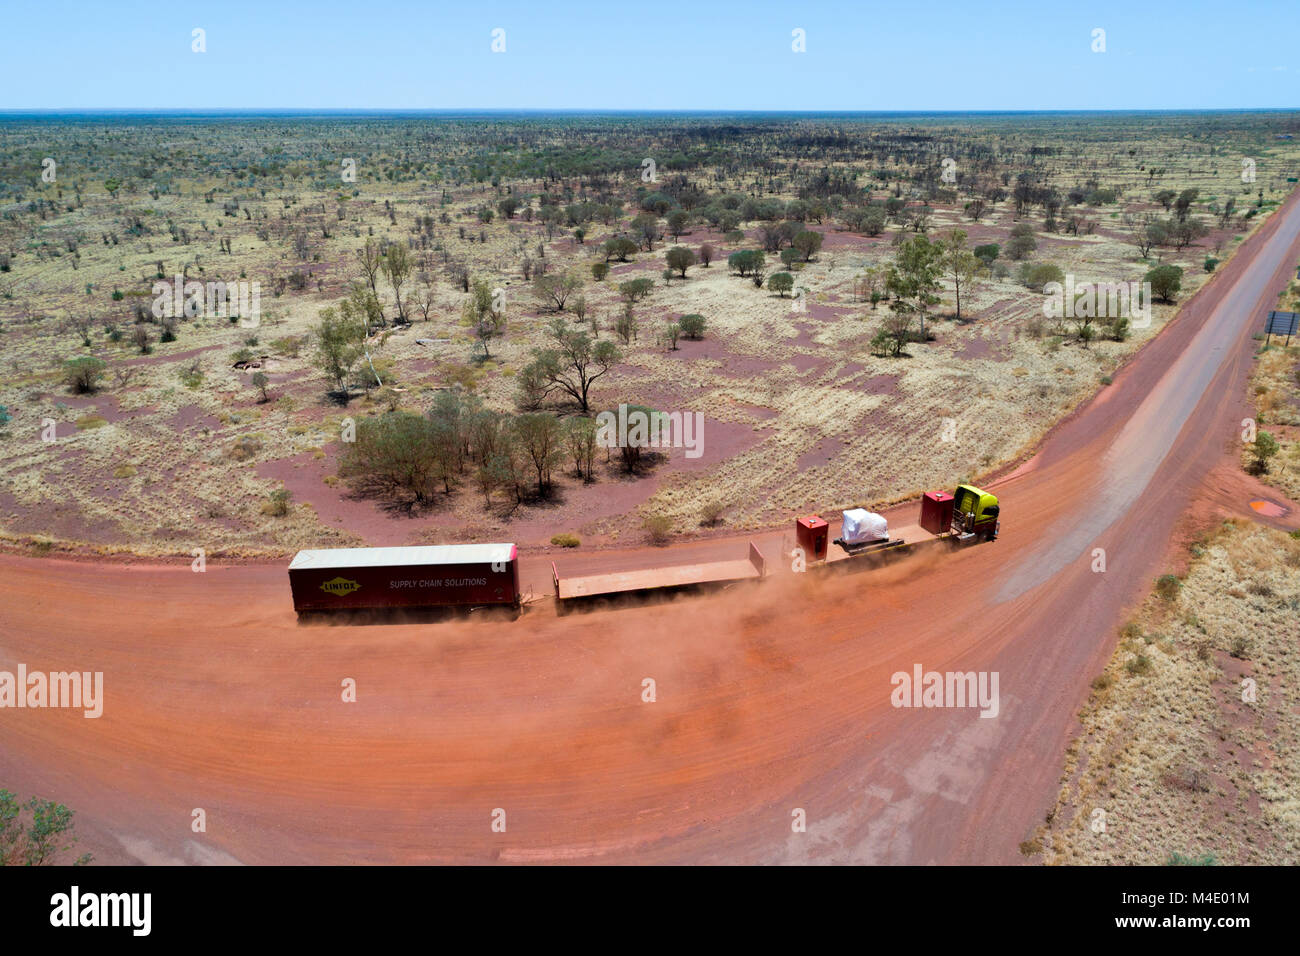 Road train on red dirt road in Australian outback, Wittenoom, Pilbara, Western Australia Stock Photo